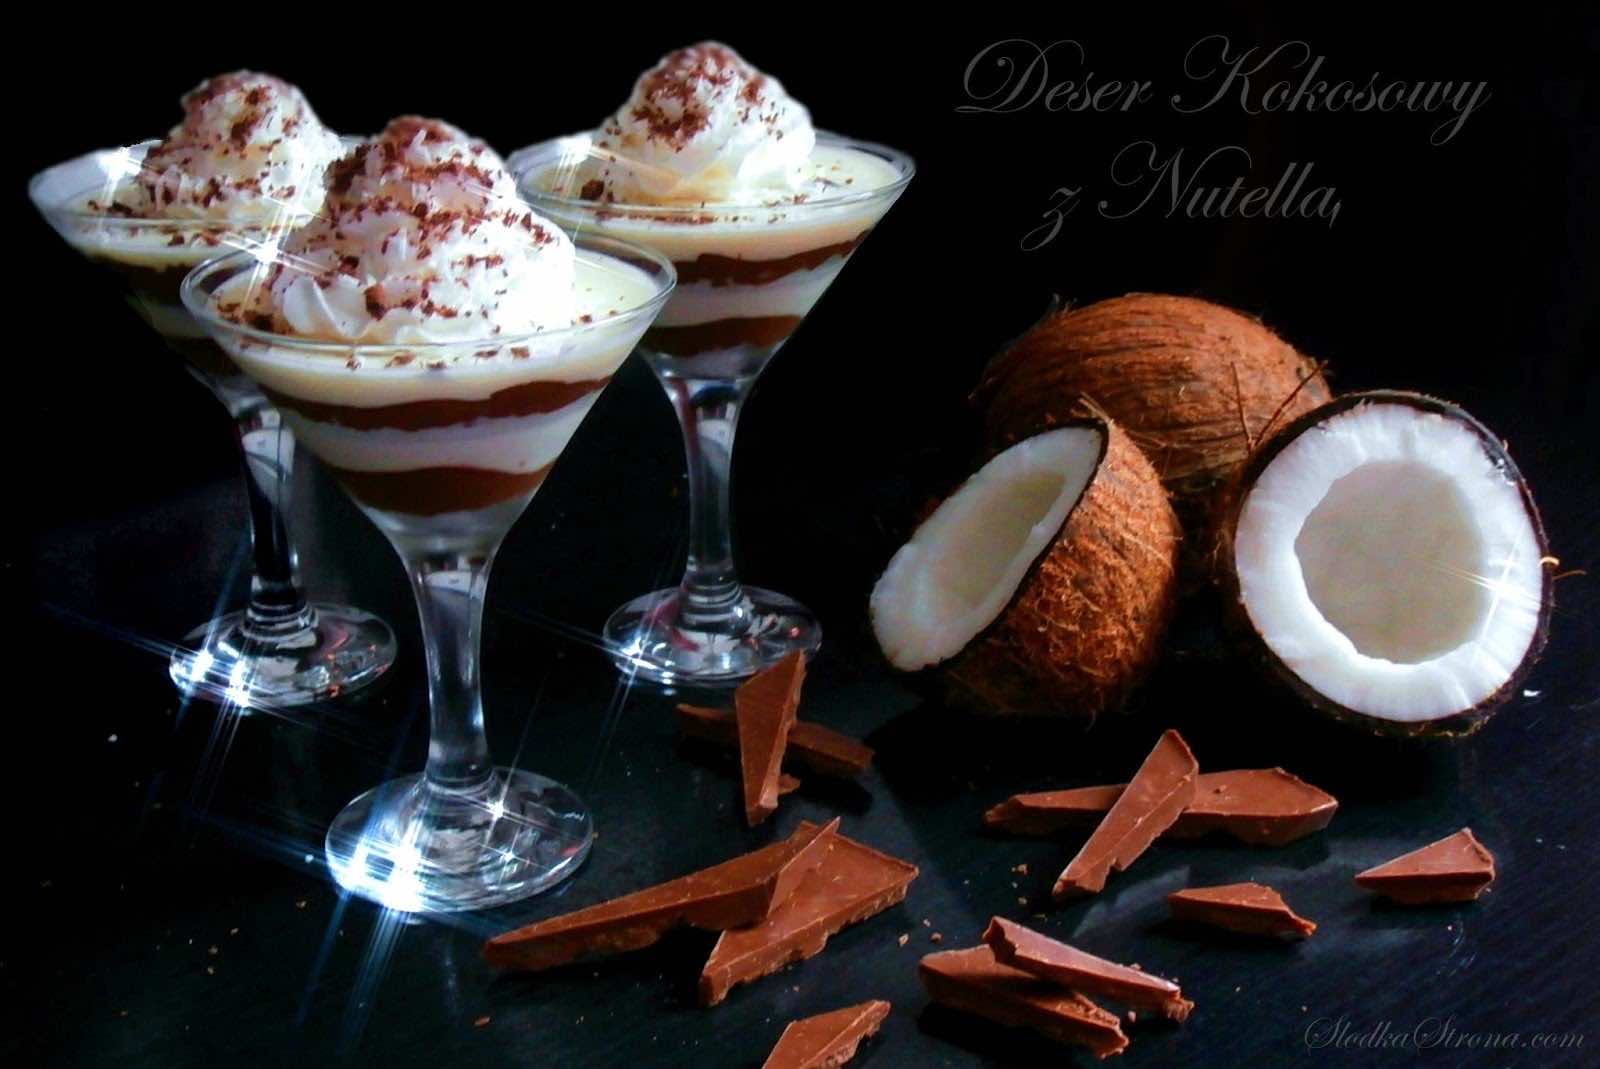 Deser Kokosowy z Nutella 00